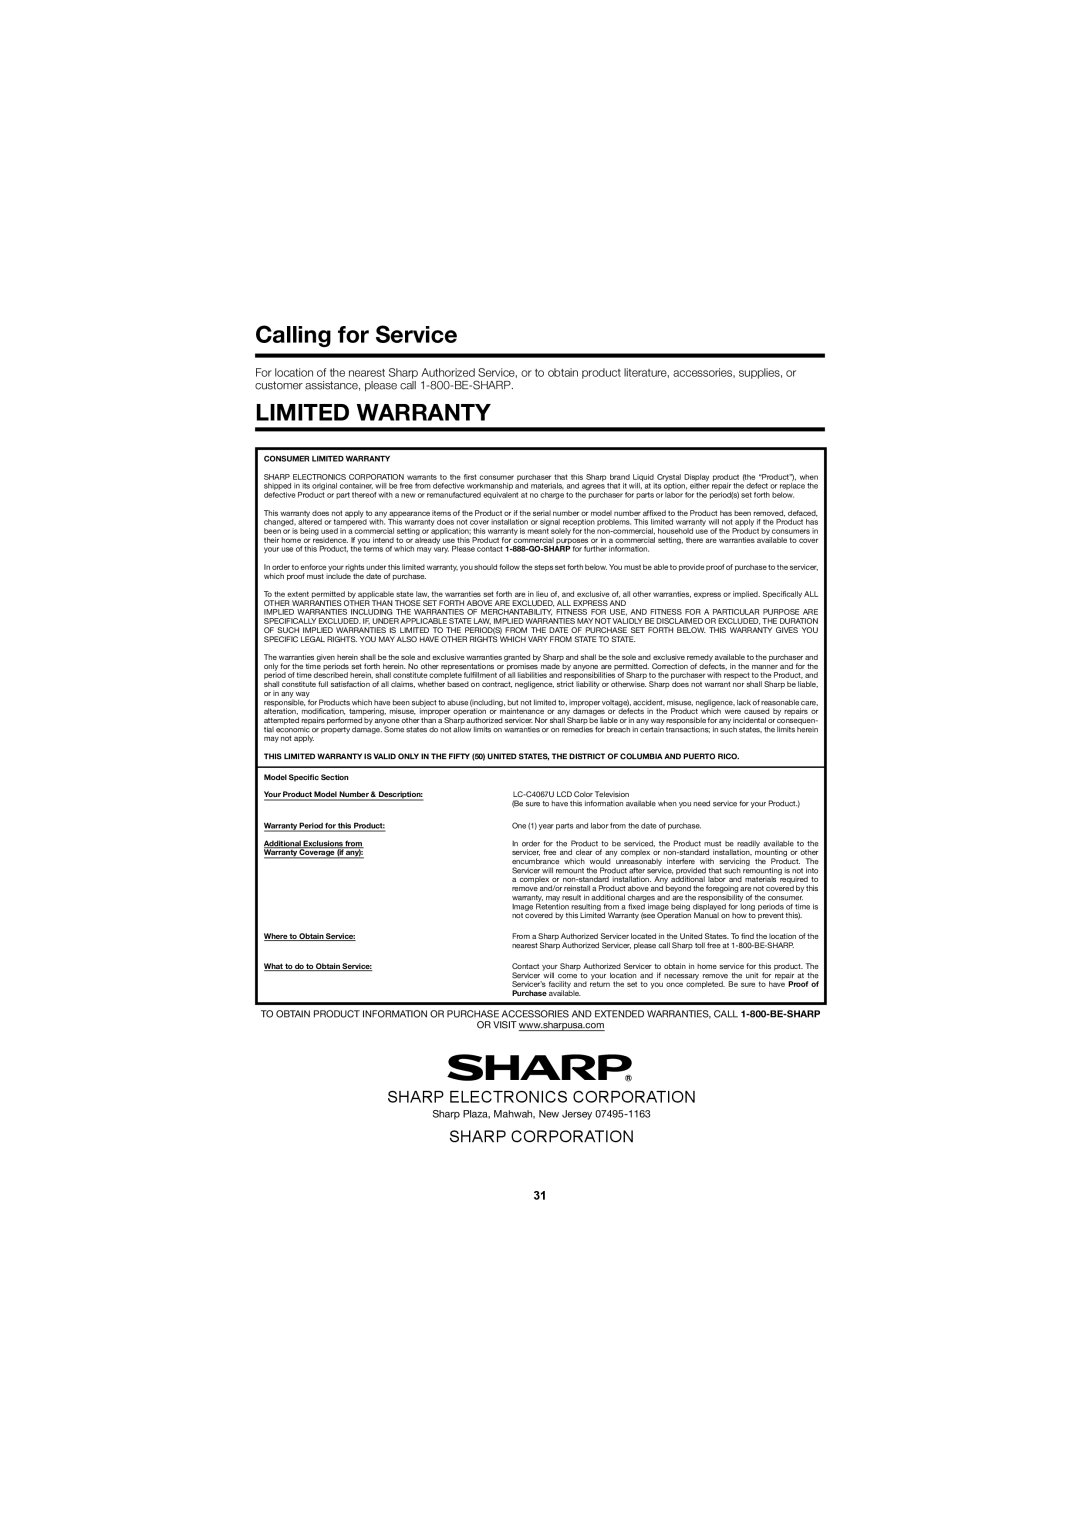 Sharp LC C4067U operation manual Calling for Service, Limited Warranty, Sharp Electronics Corporation, Sharp Corporation 